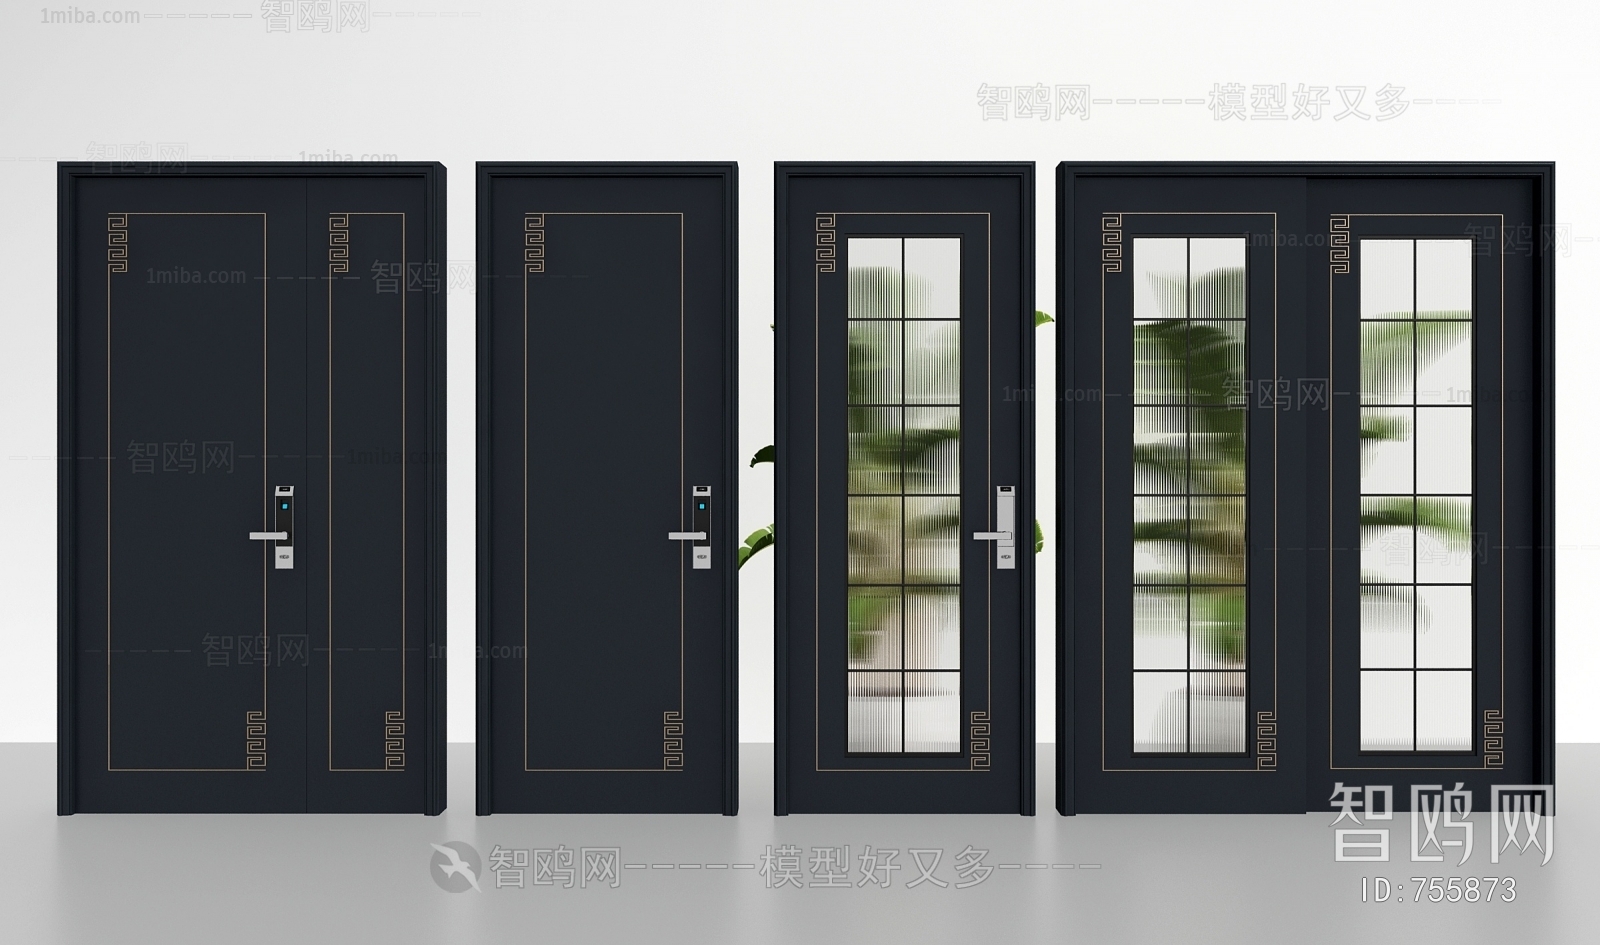 New Chinese Style Door